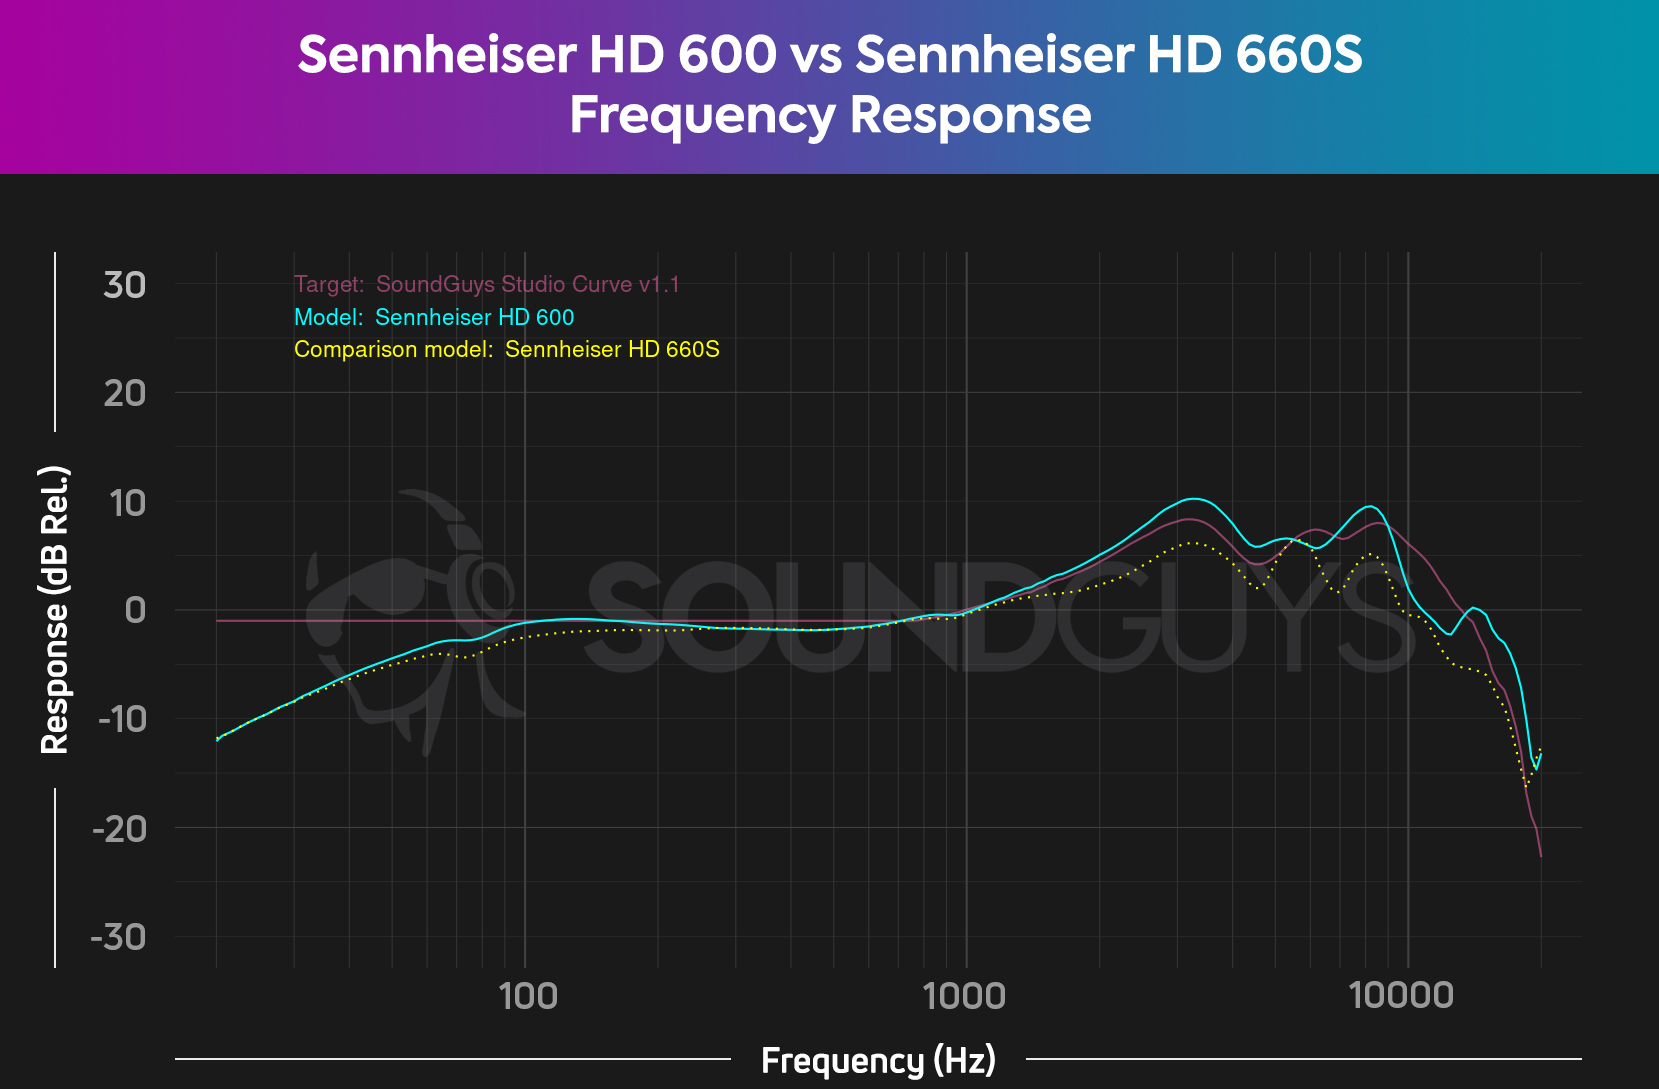 The Sennheiser HD 660S under-emphasizes treble in comparison to the Sennheiser HD 600.